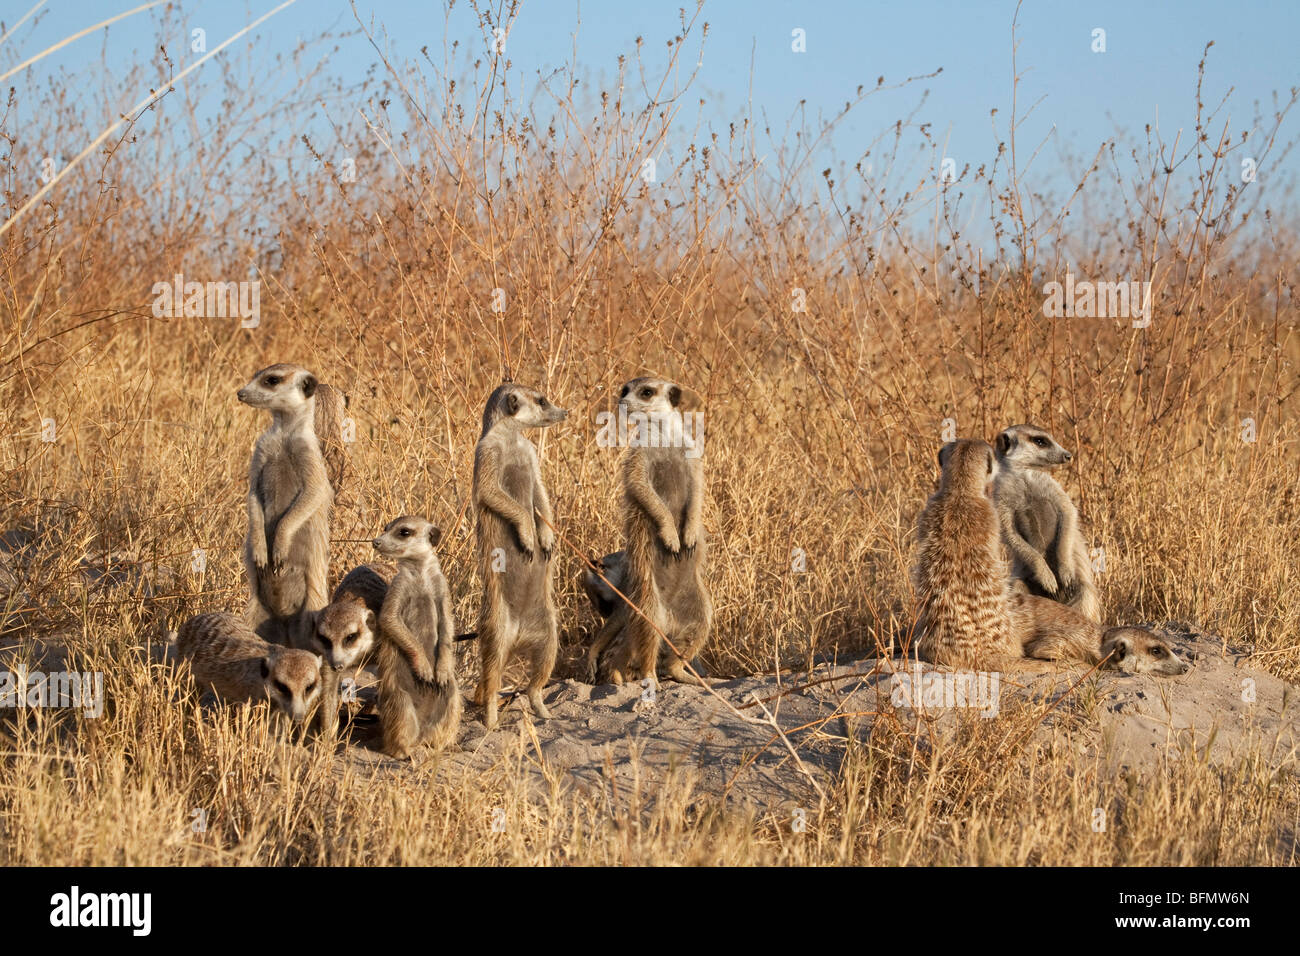 Botswana, Makgadikgadi, a family of meerkats by the entrance to their burrow. Stock Photo